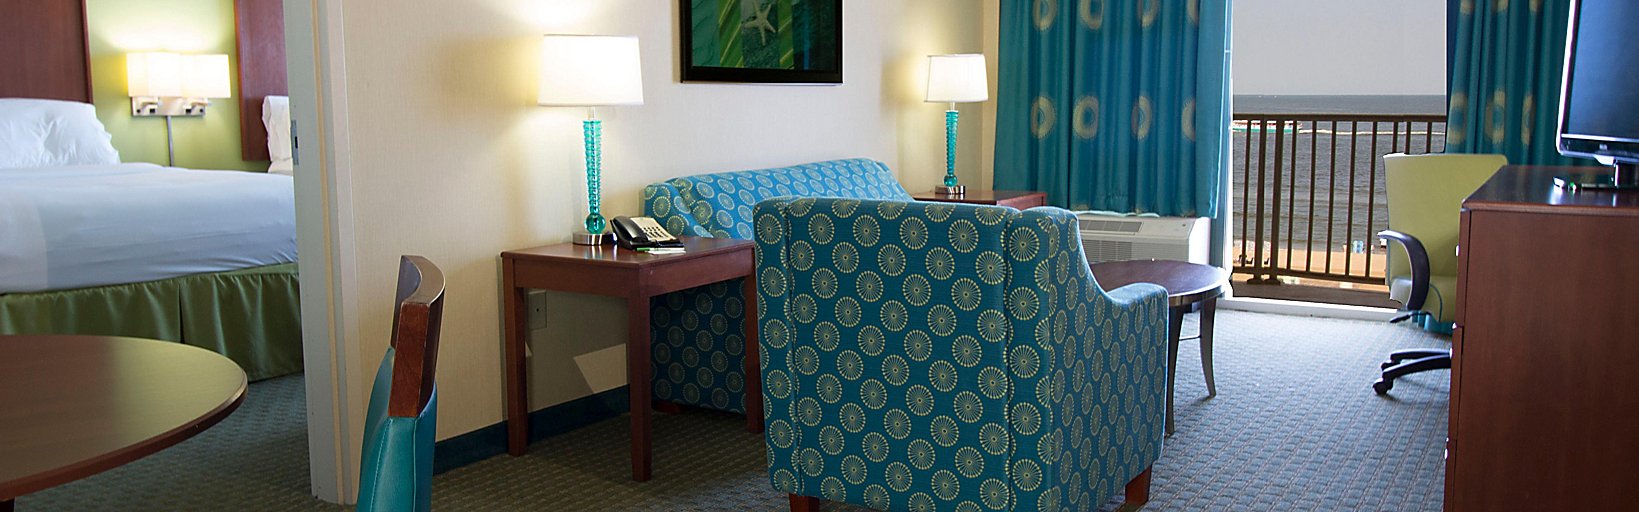 Holiday Inn Hotel Suites Virginia Beach North Beach